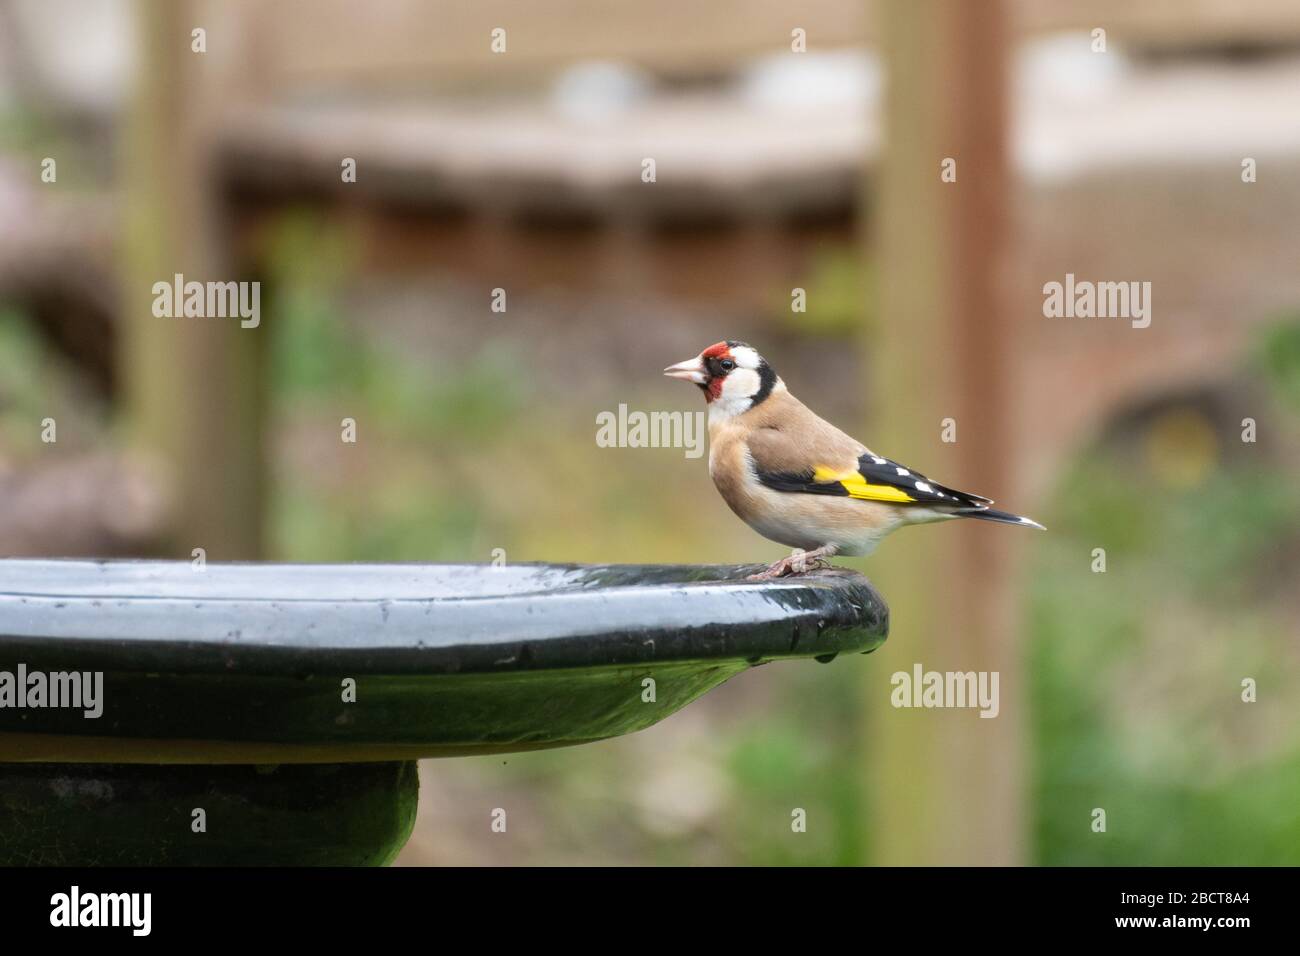 Goldfinch (Carduelis carduelis), a colourful garden bird perched on a bird bath, UK Stock Photo